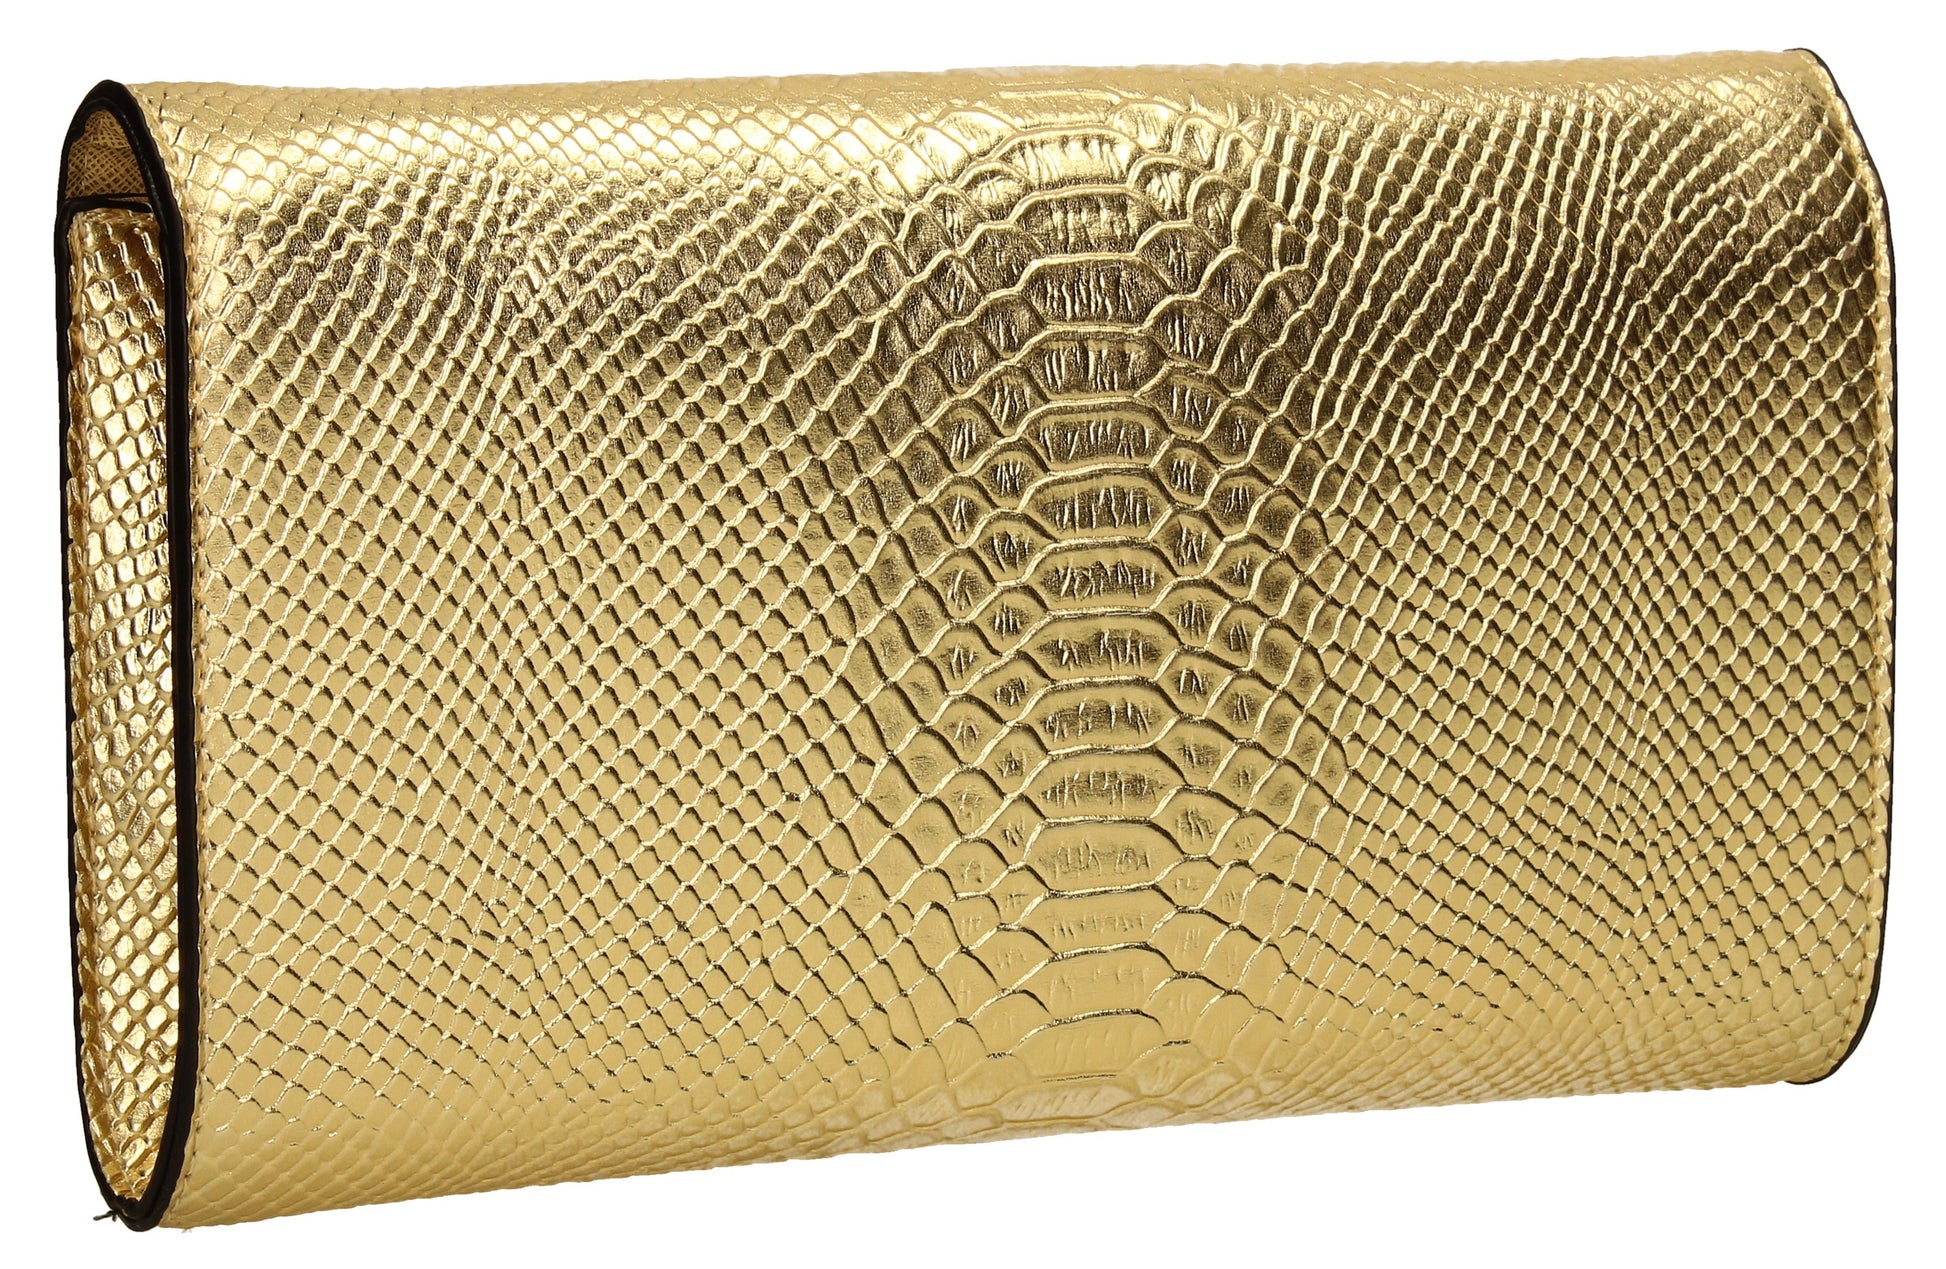 SWANKYSWANS Ormy Clutch Bag Gold Cute Cheap Clutch Bag For Weddings School and Work